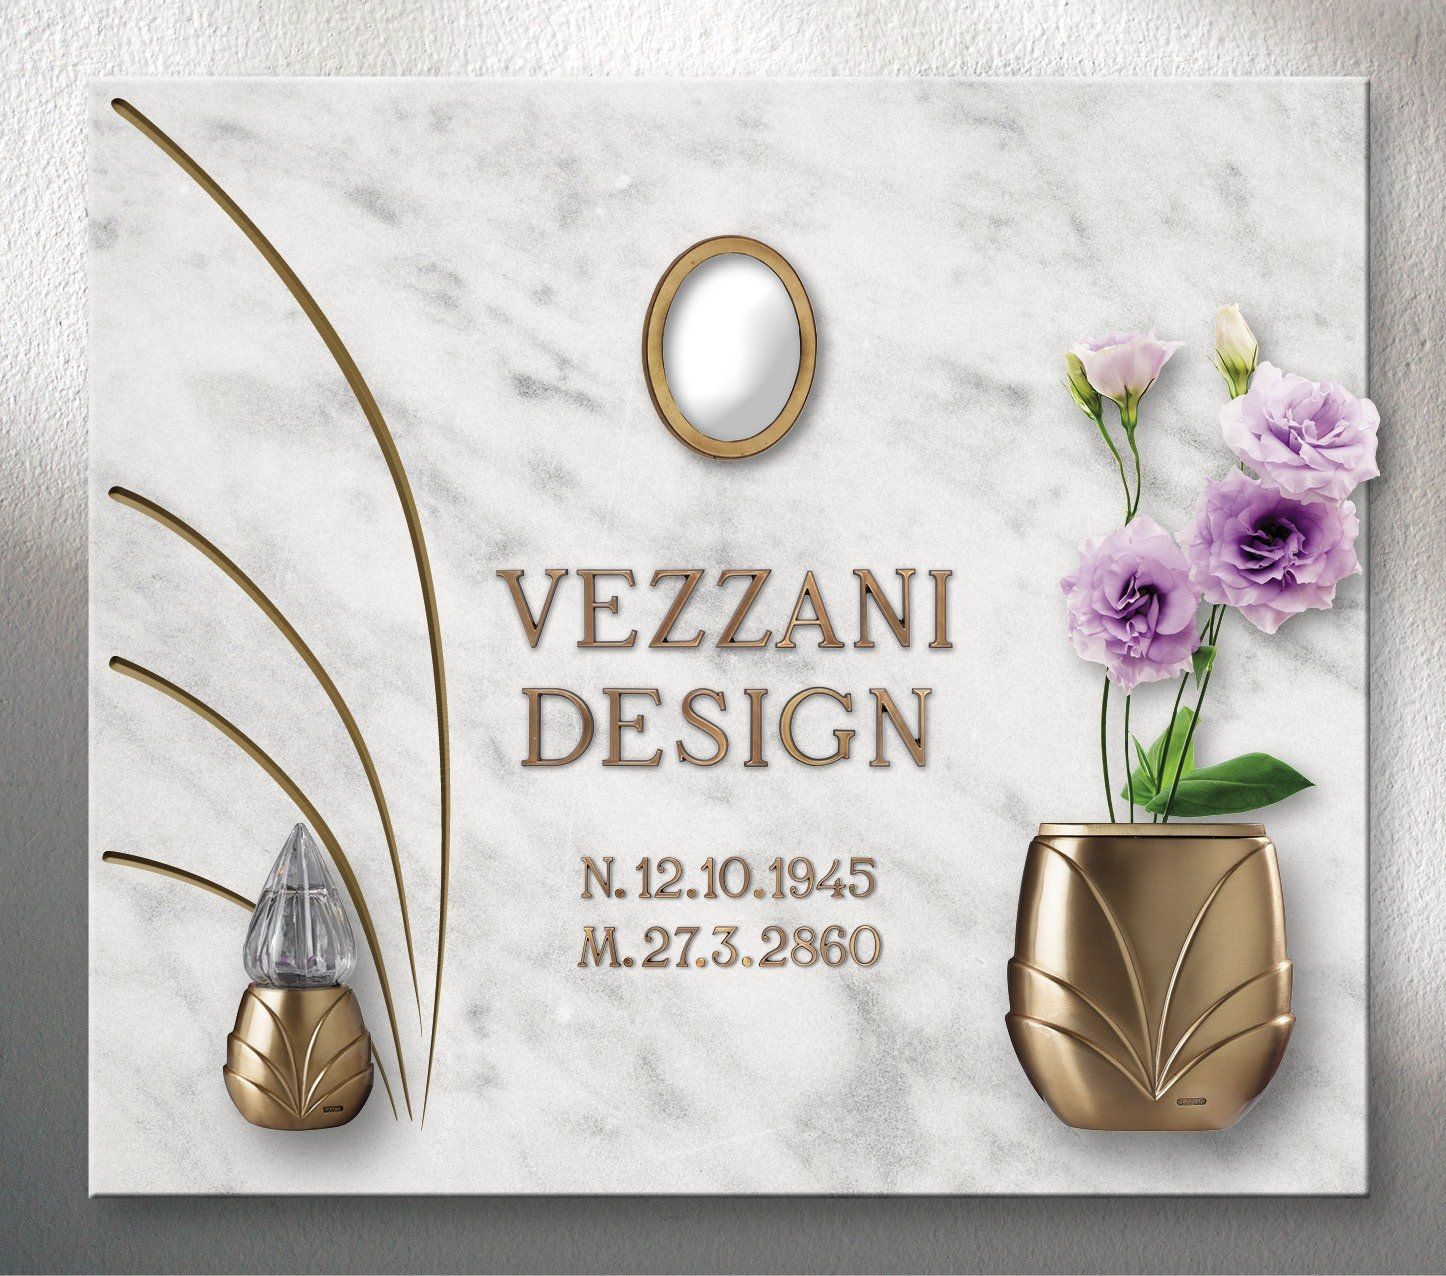 Niche with personalized engraving vezzani design 29